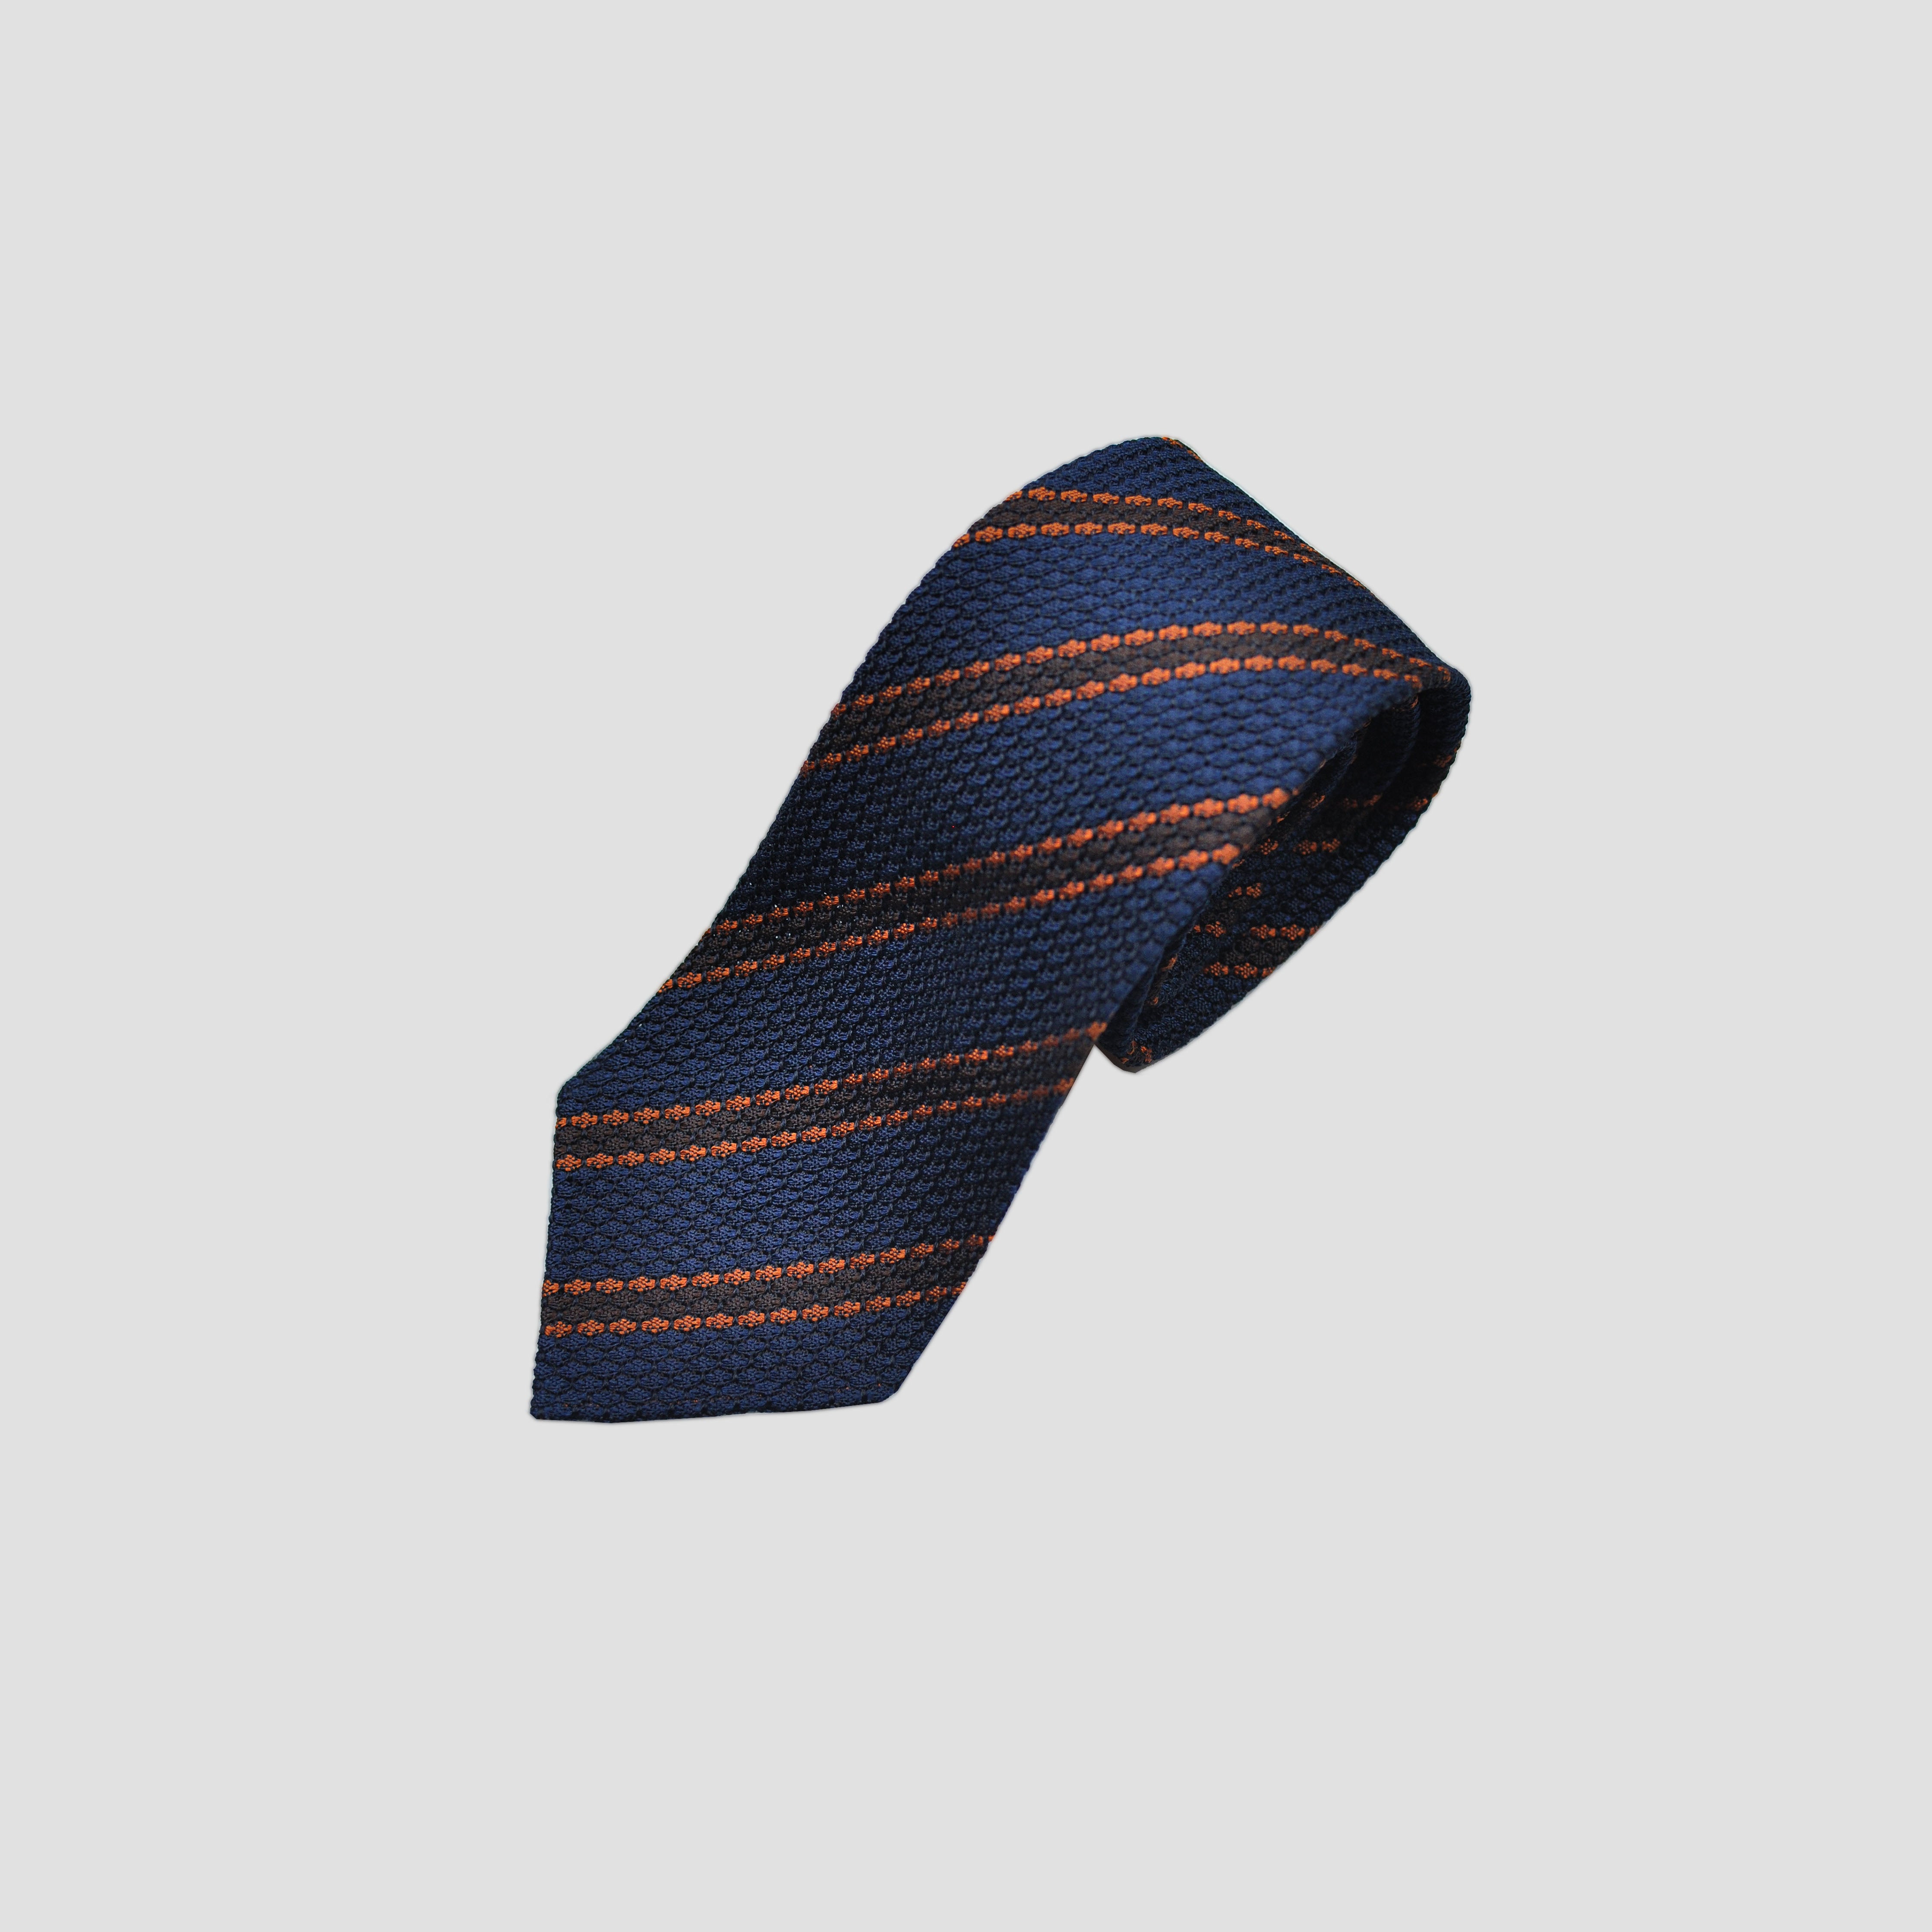 Neat Stripes Handrolled Grenadine Silk Tie in Blue, Brown & Copper